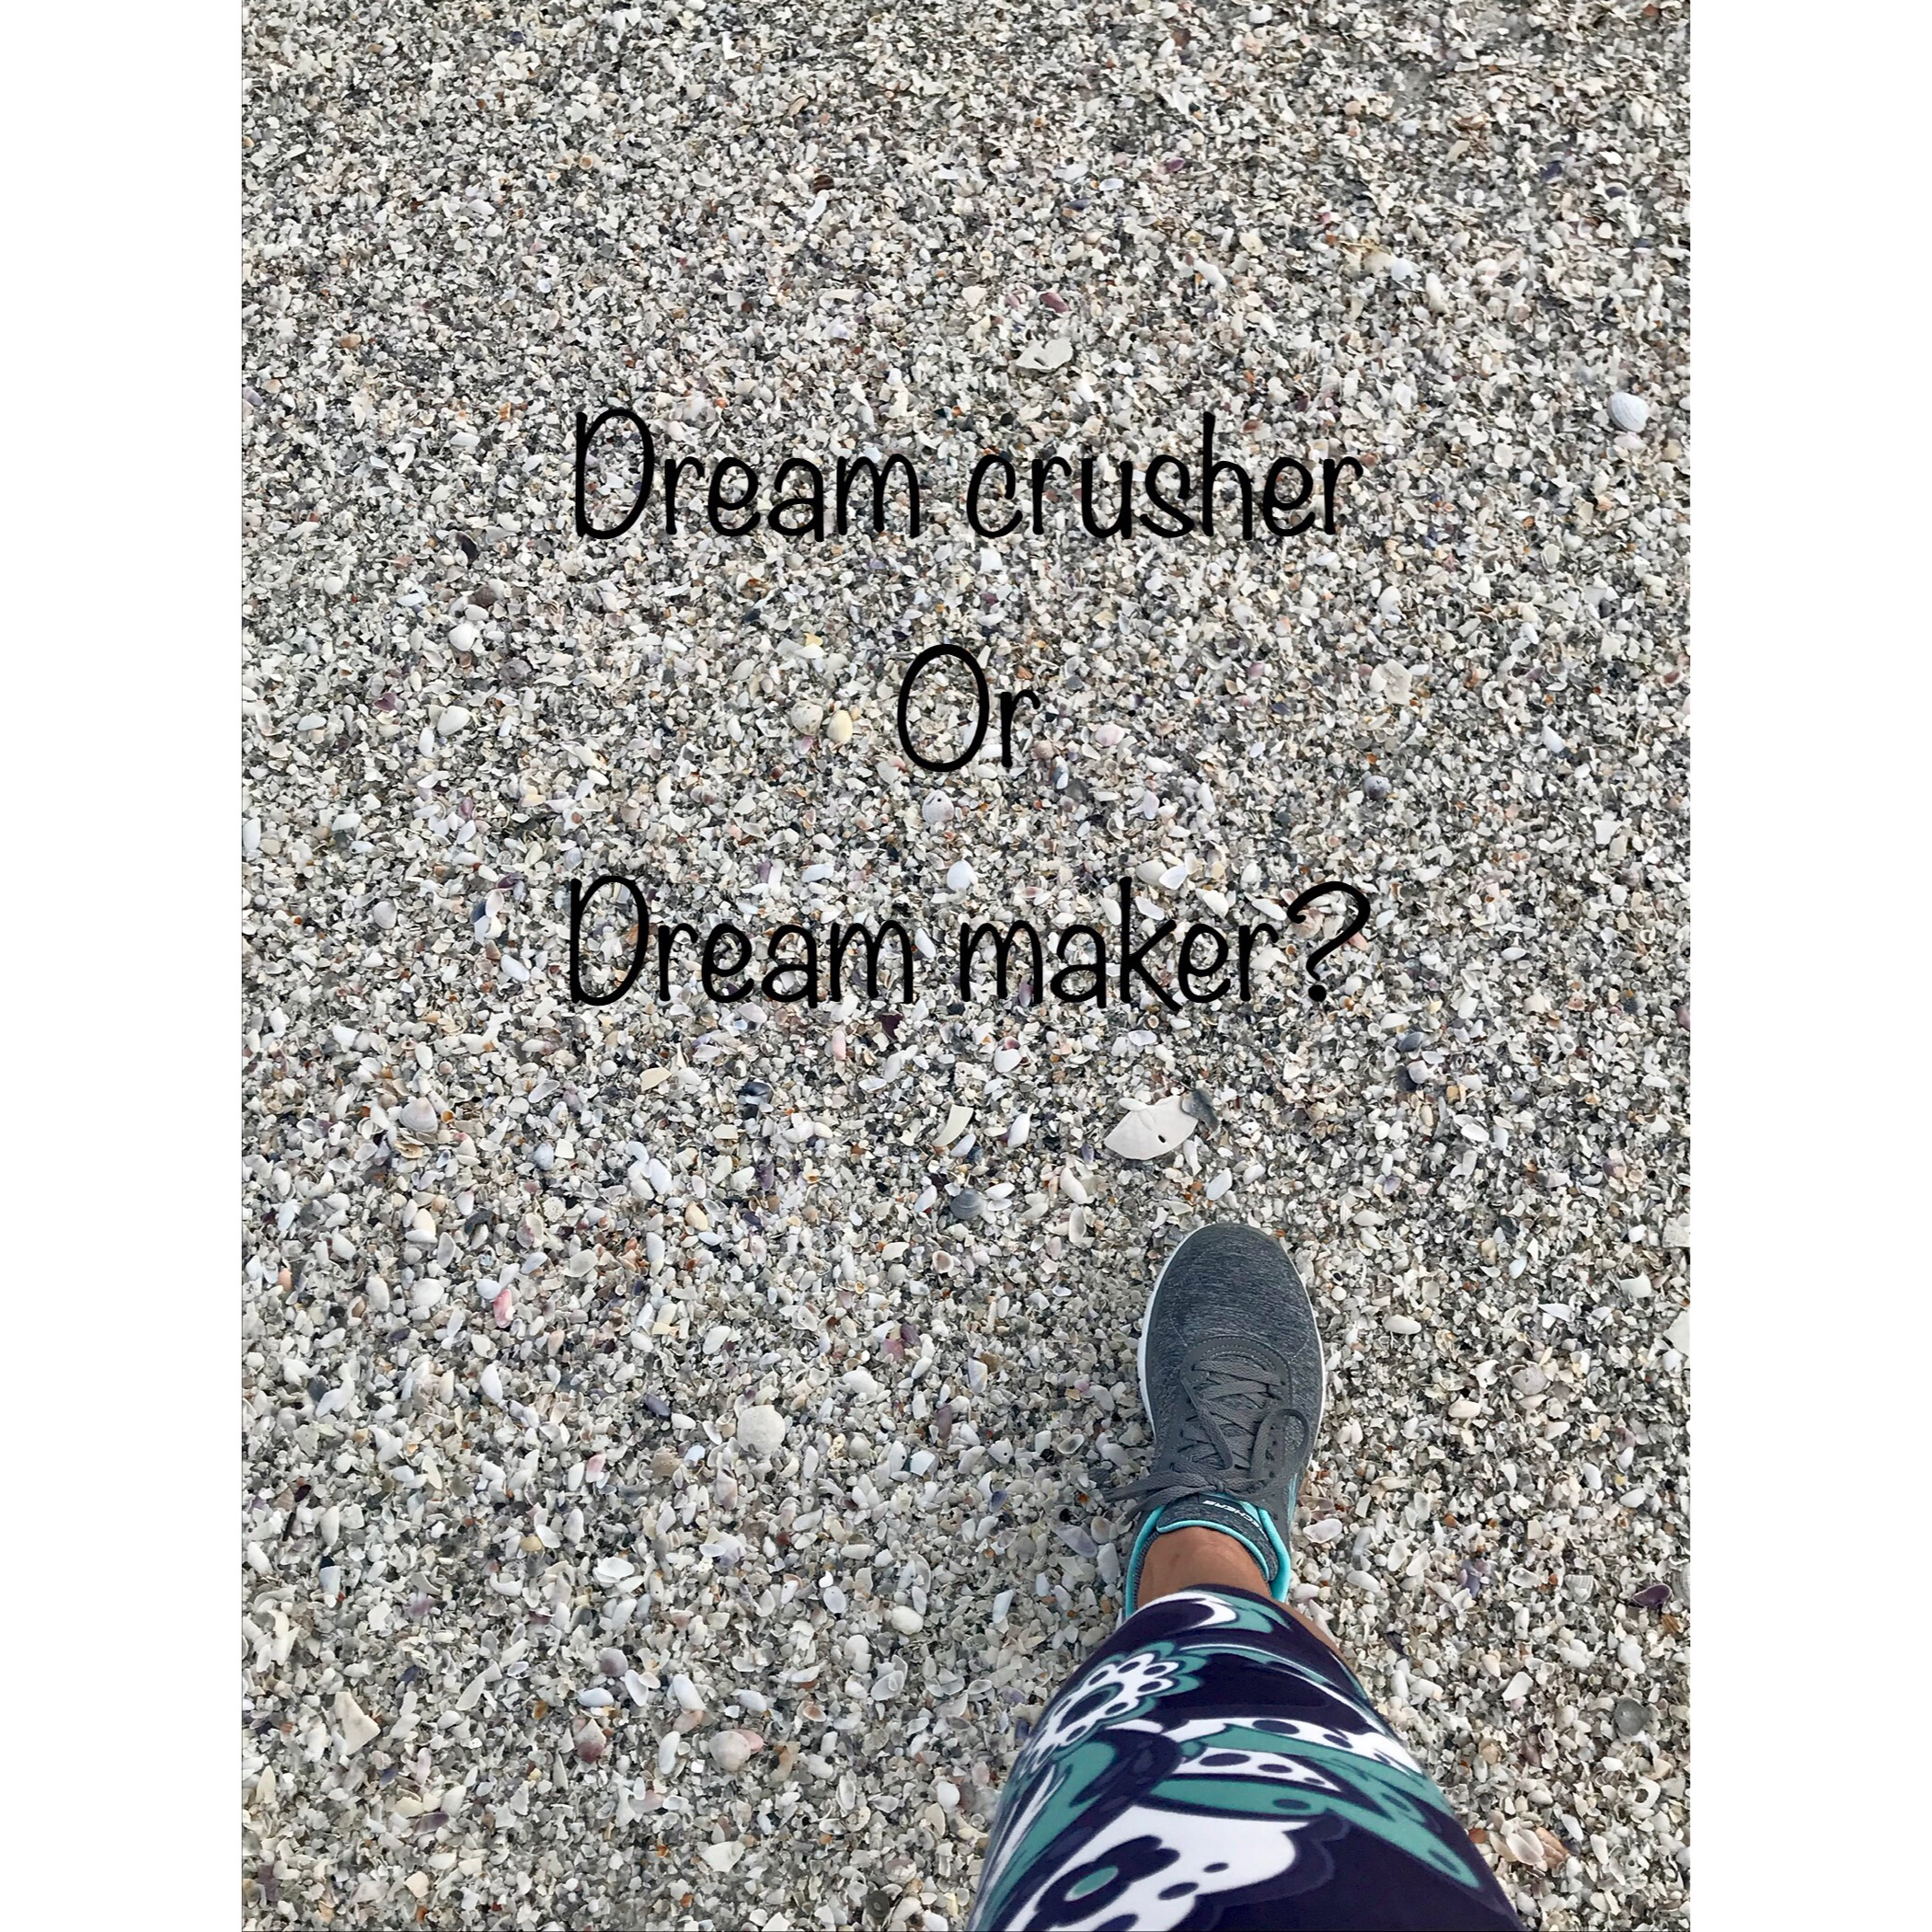 Are you are dream-maker or dream-crusher?